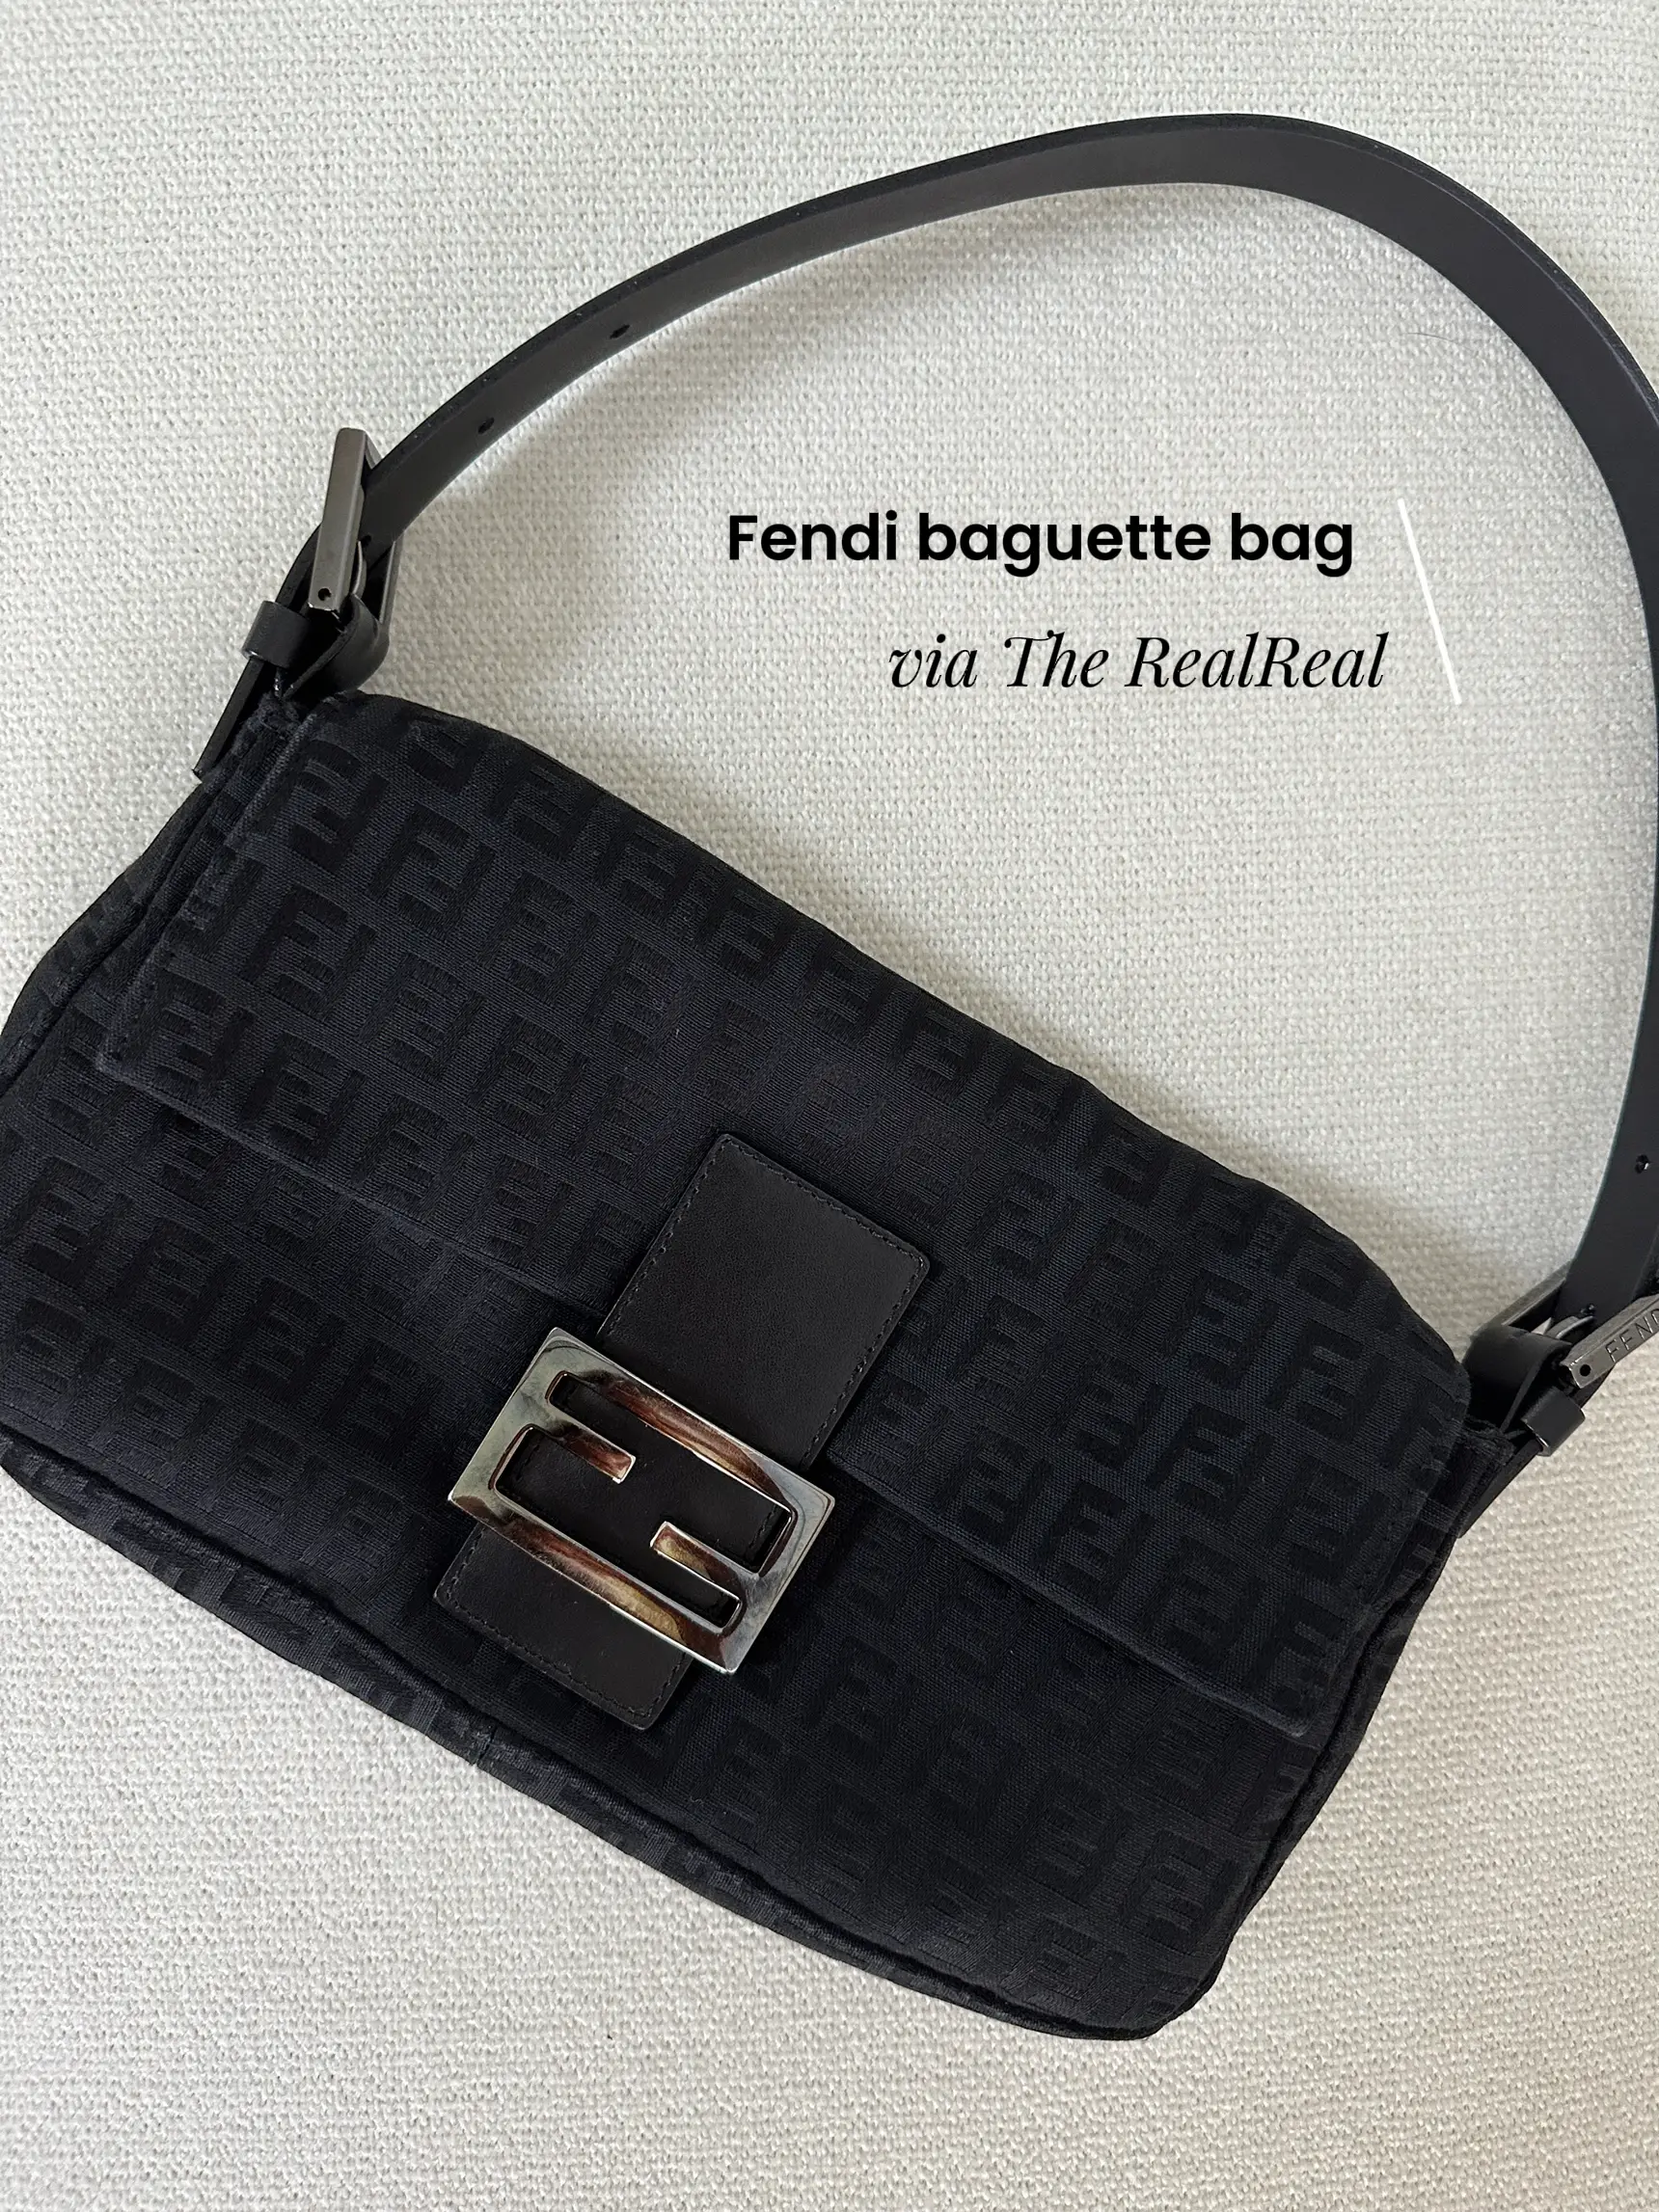 Fendi Baguette  Black bag outfit, Black leather bags, Fendi